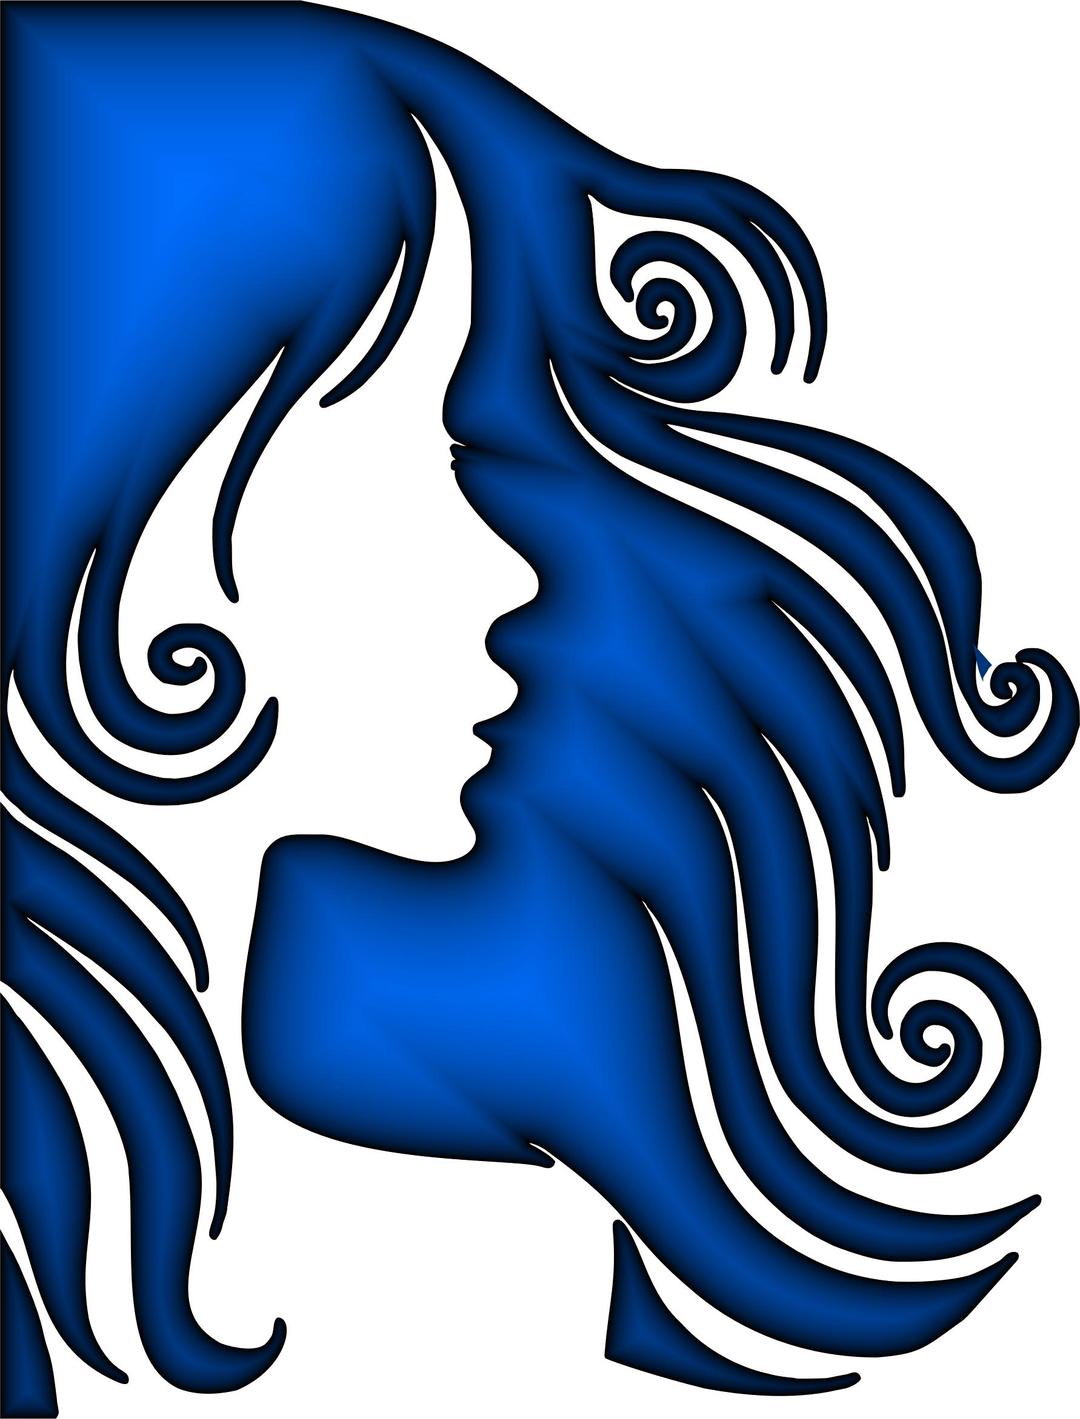 Female Hair Profile Silhouette Sapphire png transparent